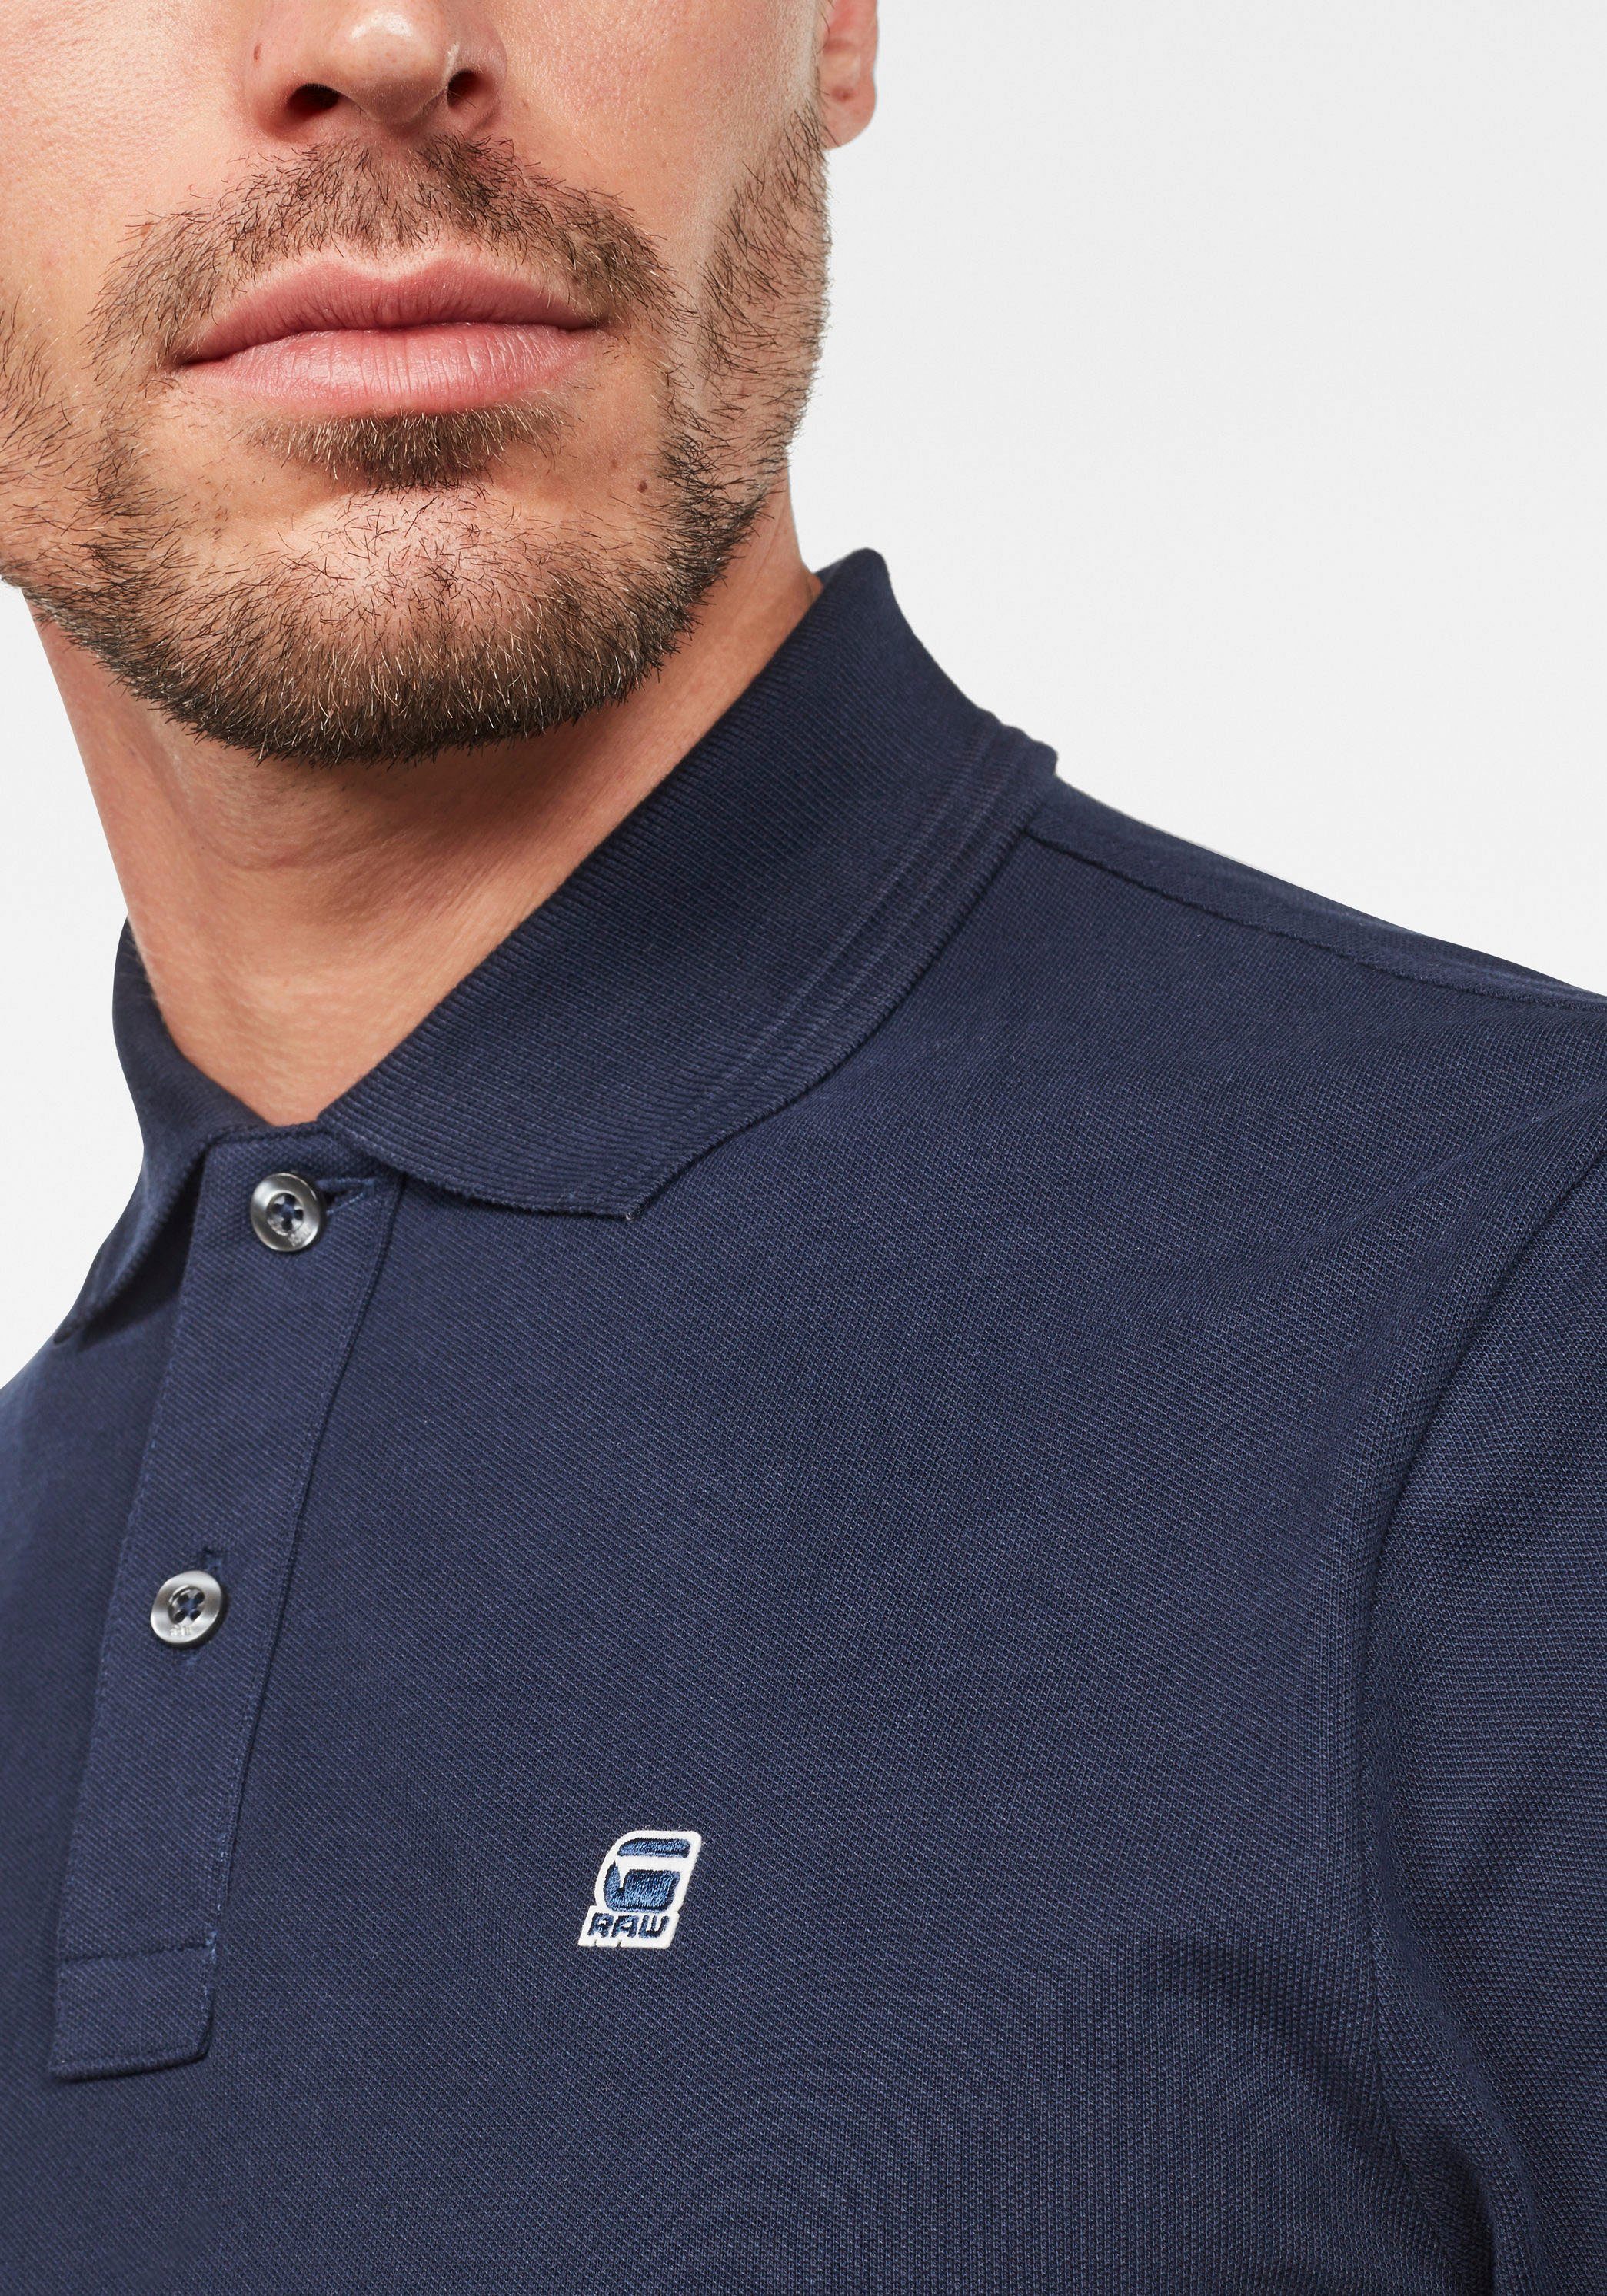 Dunda Logostickerei Polo auf Poloshirt der Brust marine RAW G-Star